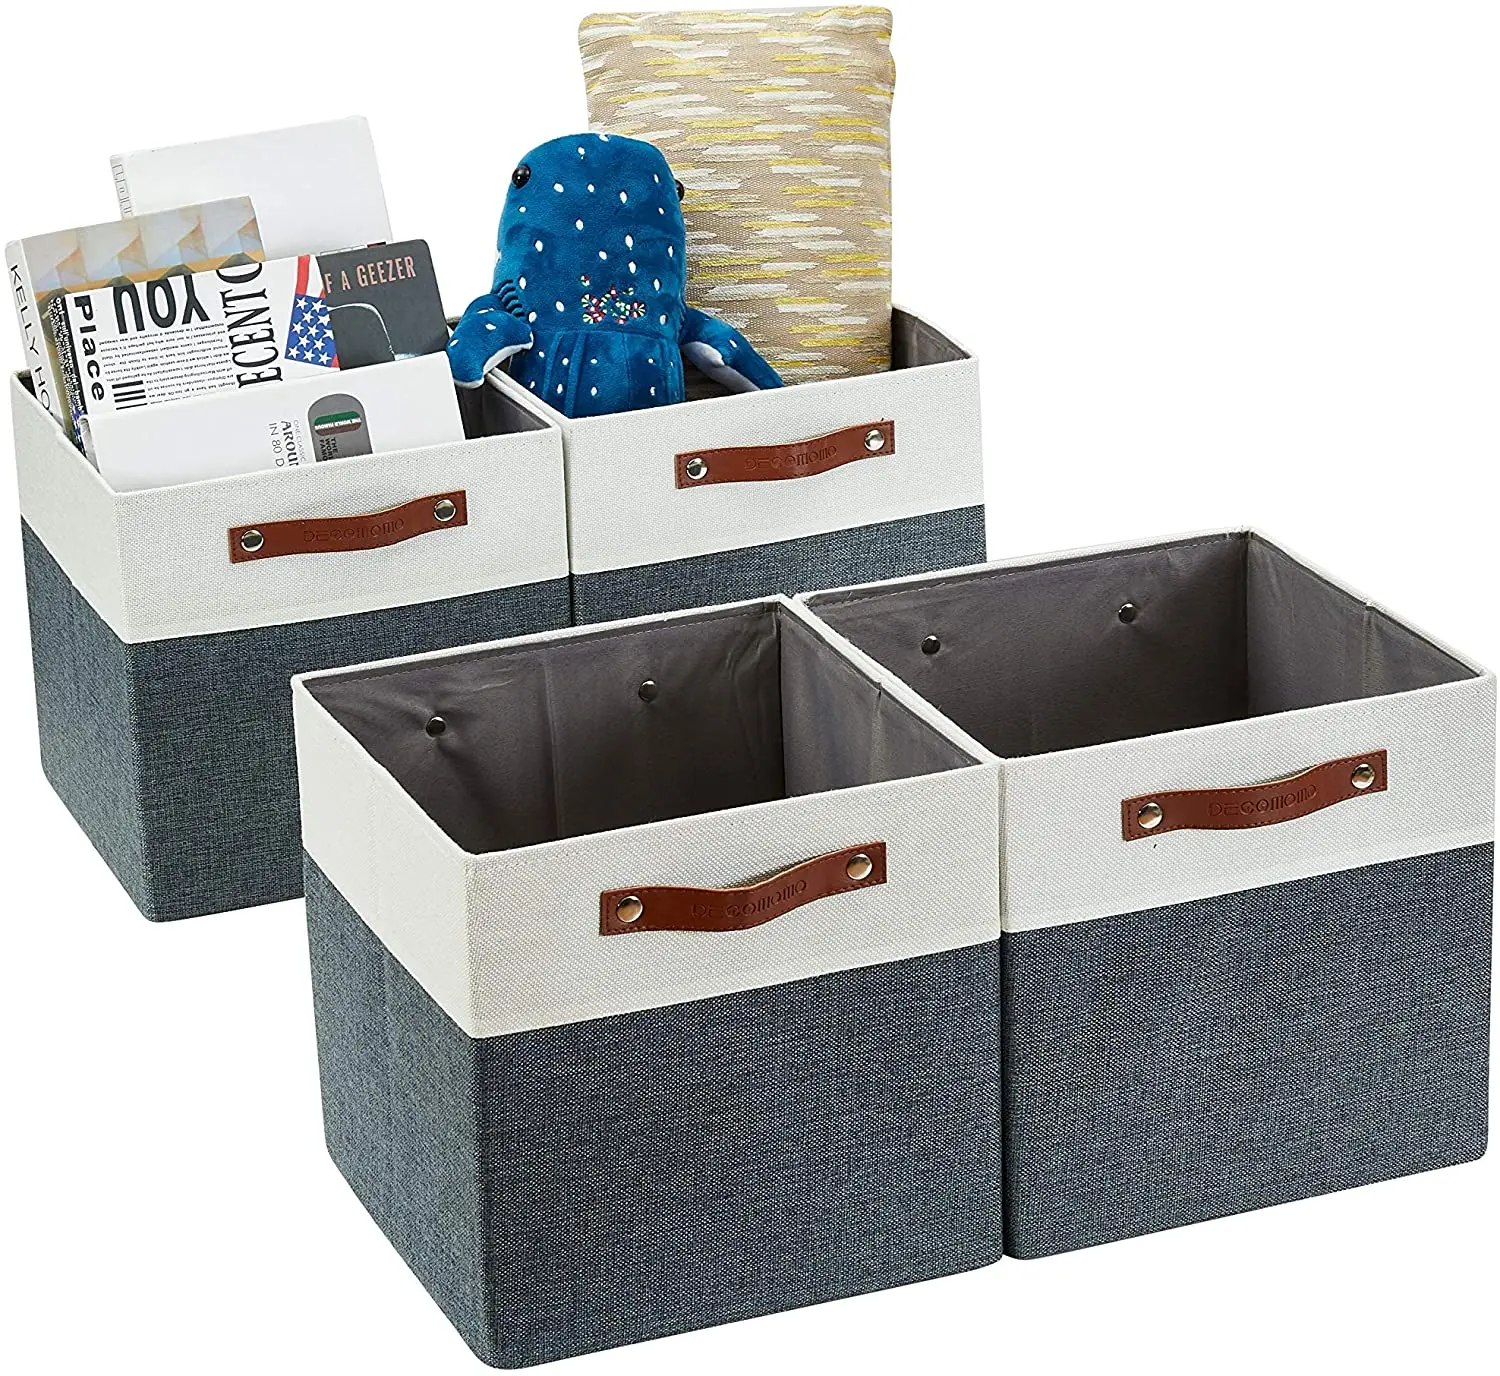 

Foldable Storage Bin Collapsible Sturdy Cationic Fabric Storage Basket Cube W/Handles For Organizing Shelf Nursery Home Closet